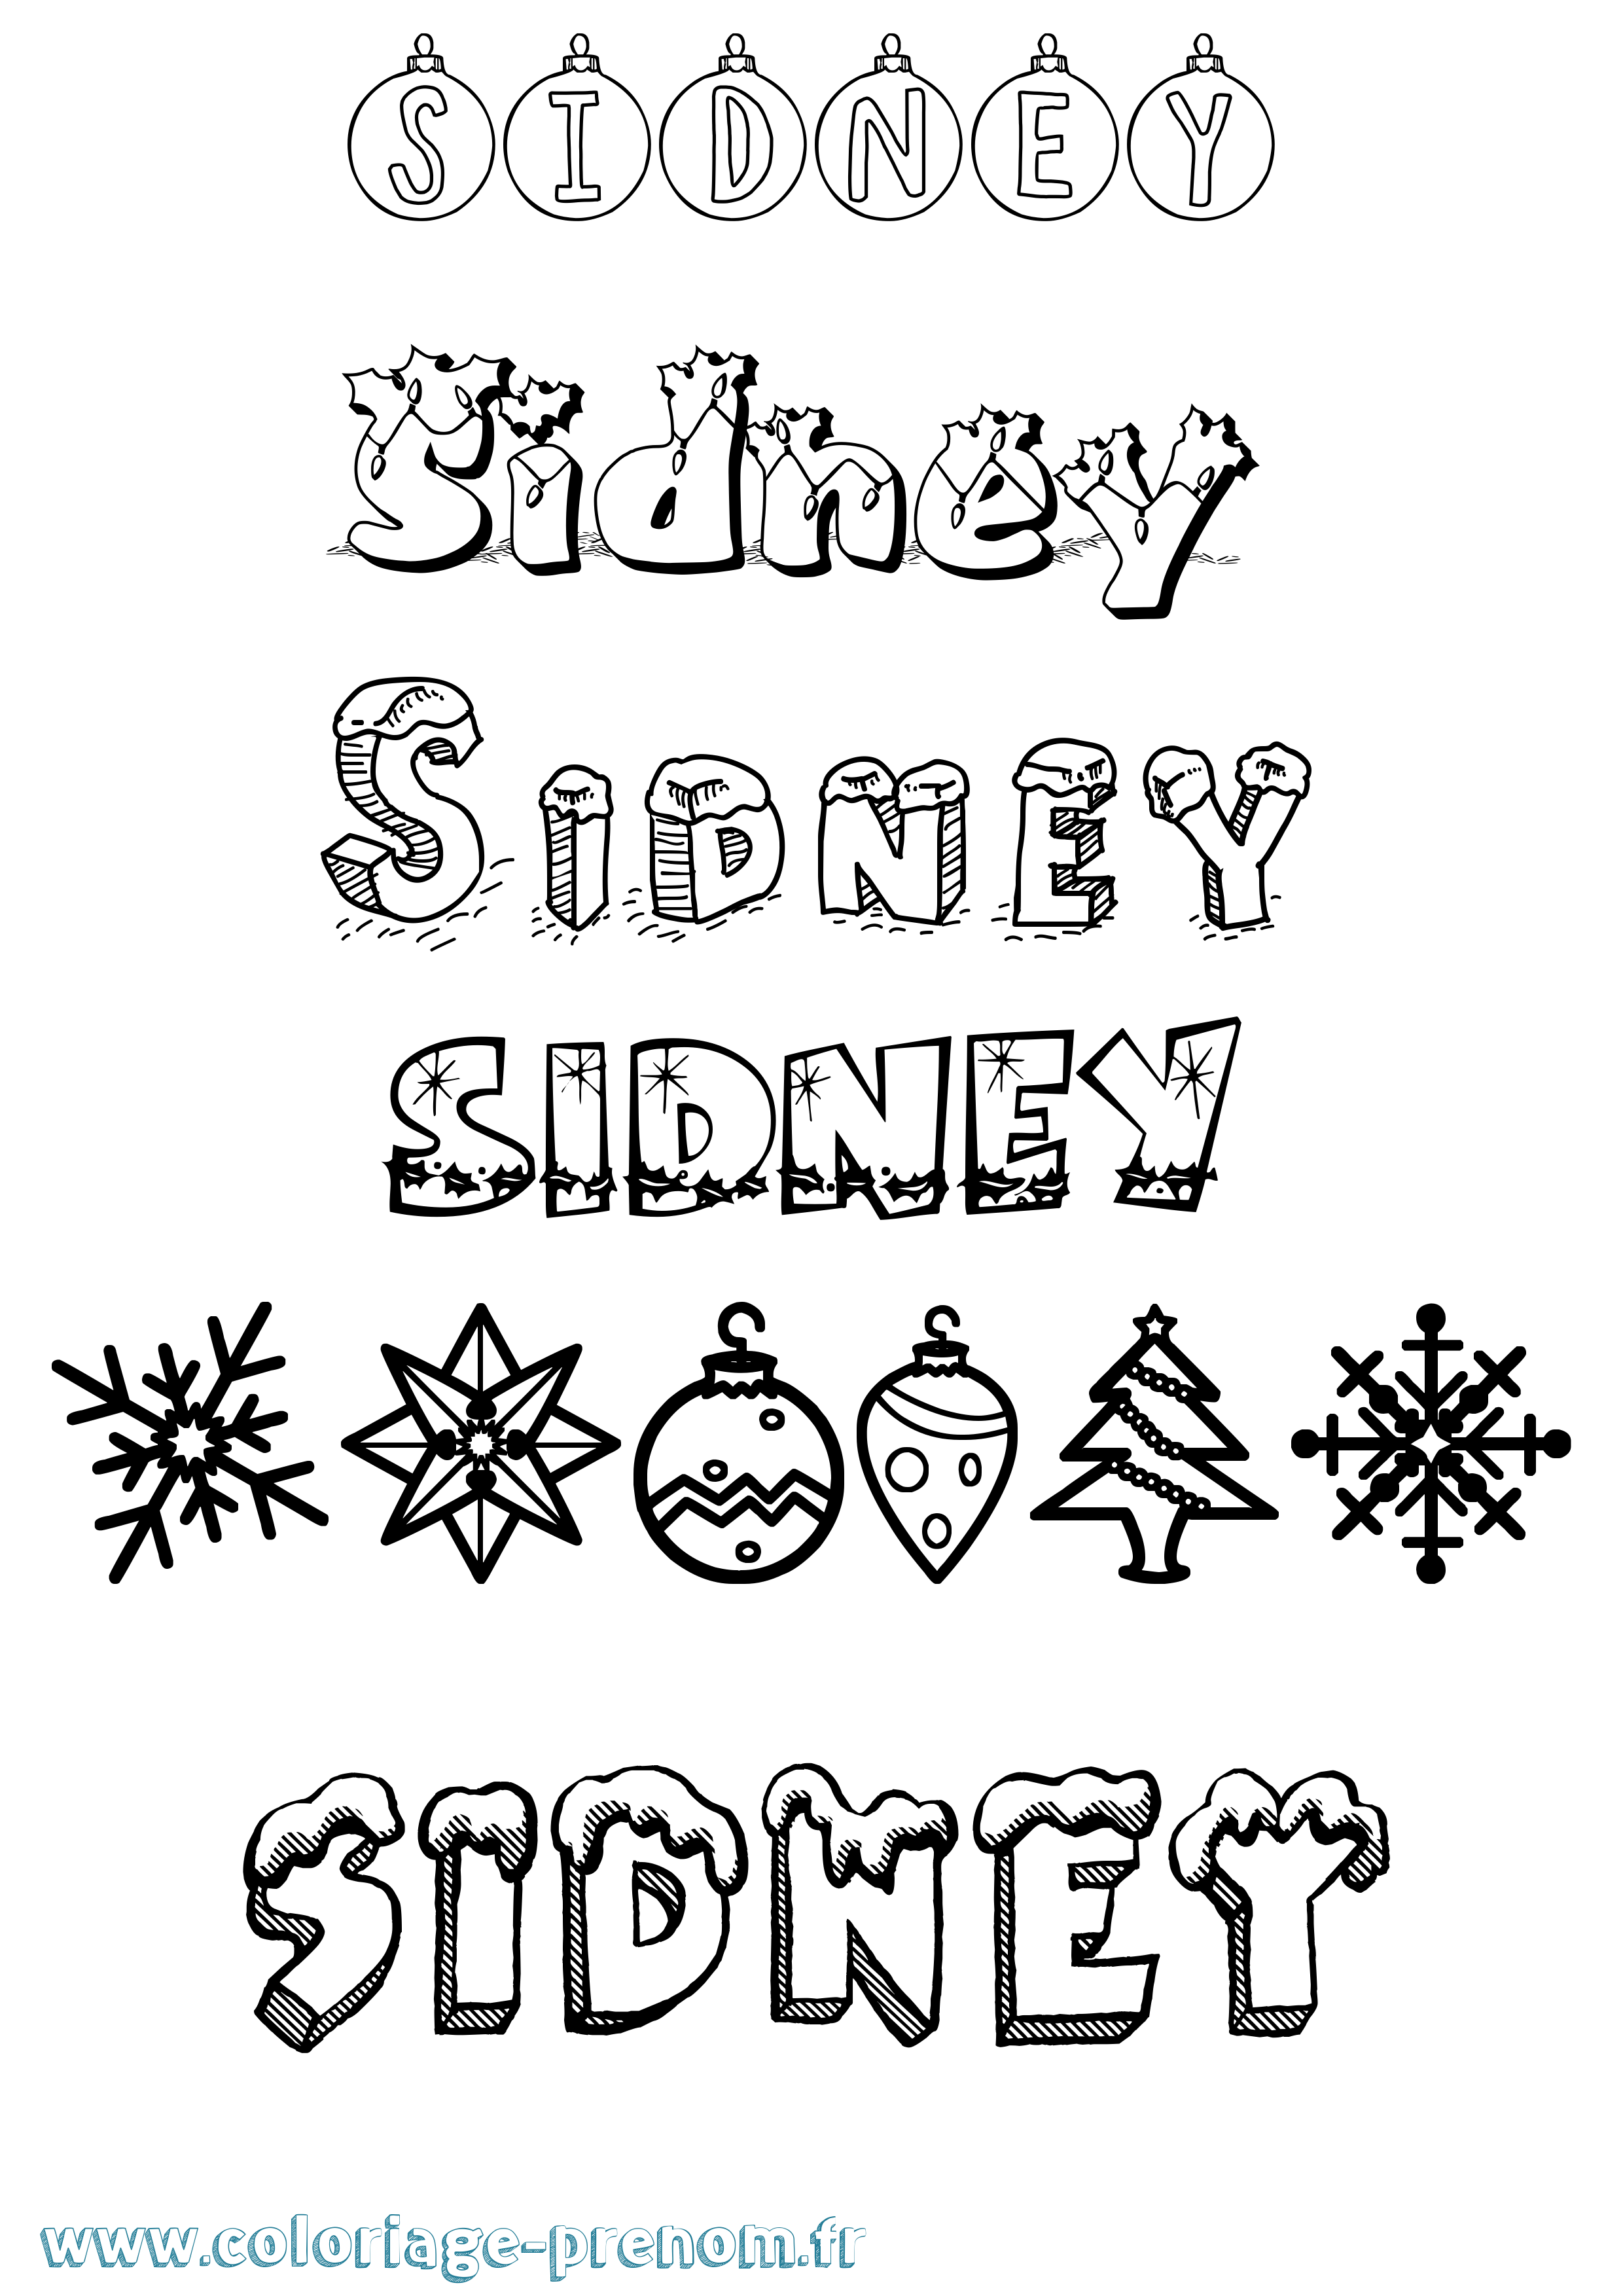 Coloriage prénom Sidney